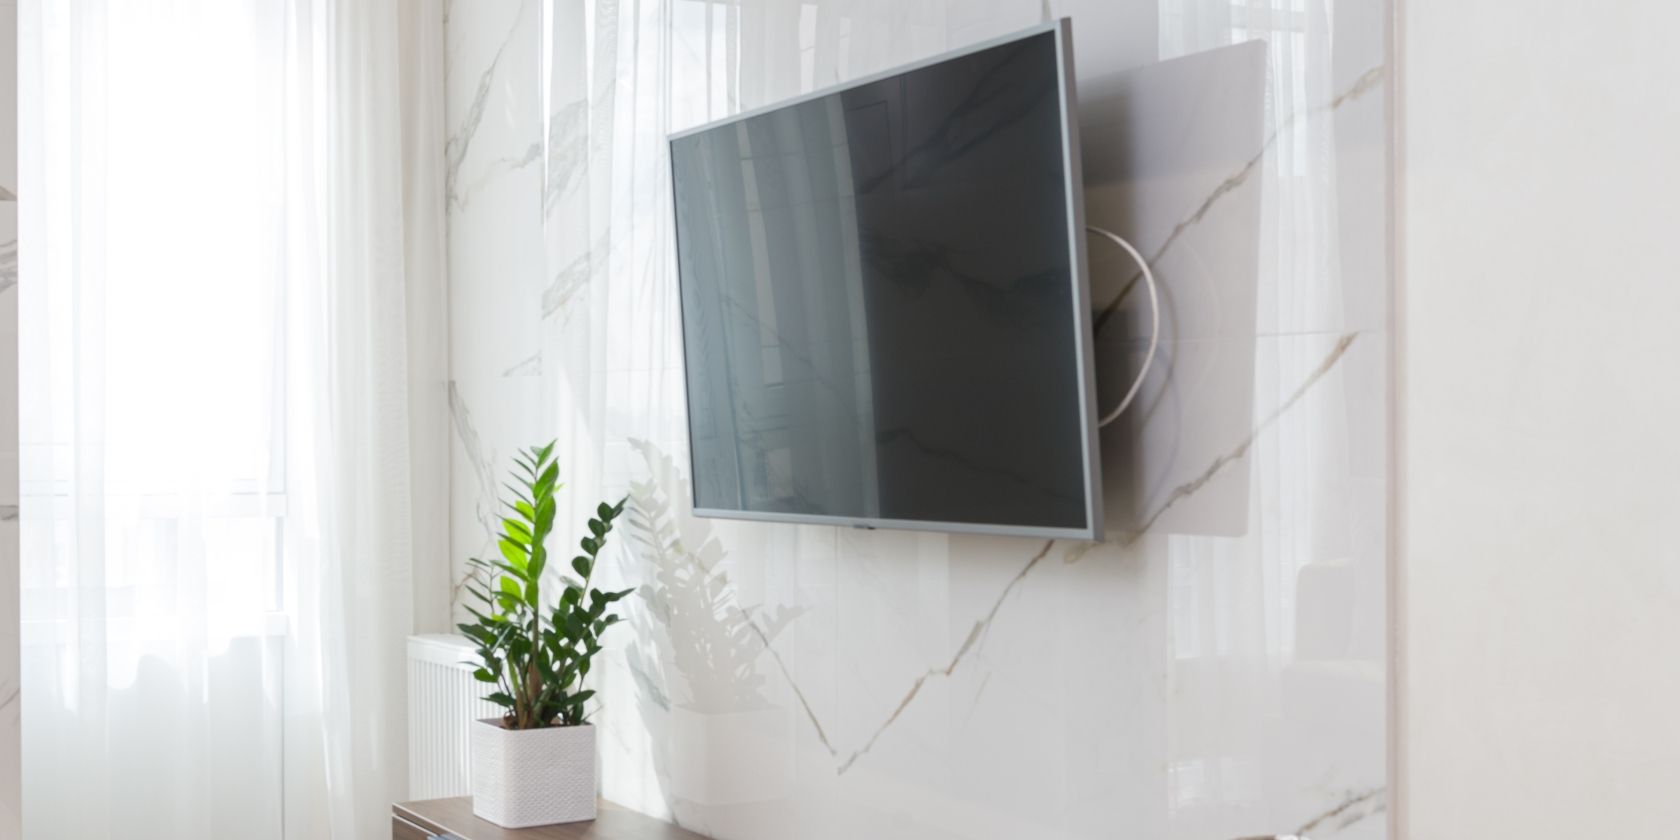 Wall-mounted living room TV